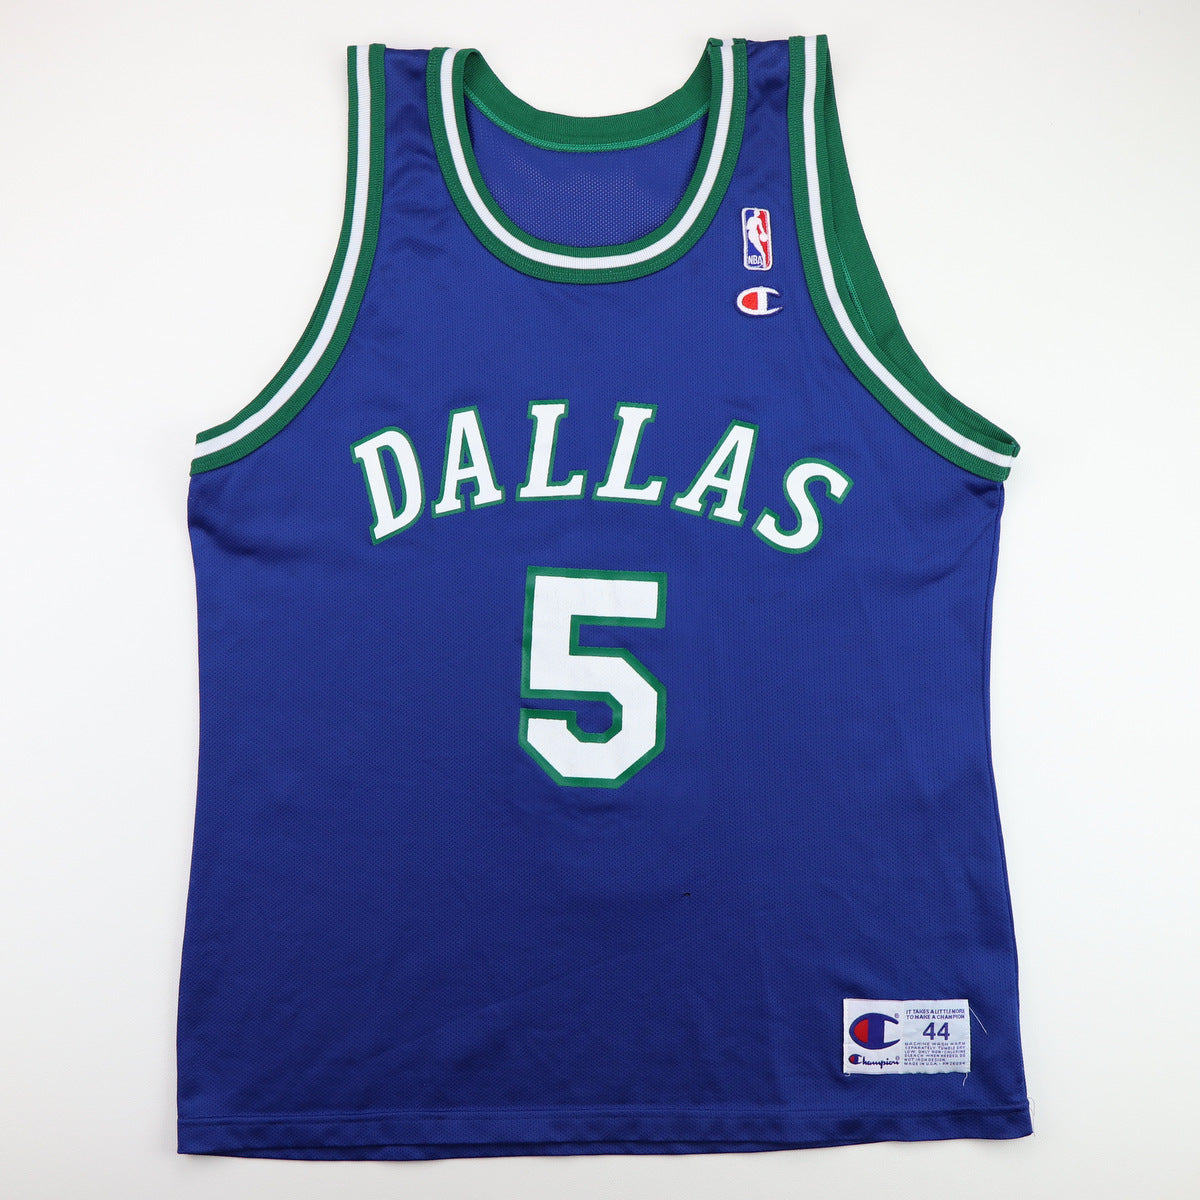 Wyco Vintage 1990s Jason Kidd Dallas Mavericks Basketball Jersey